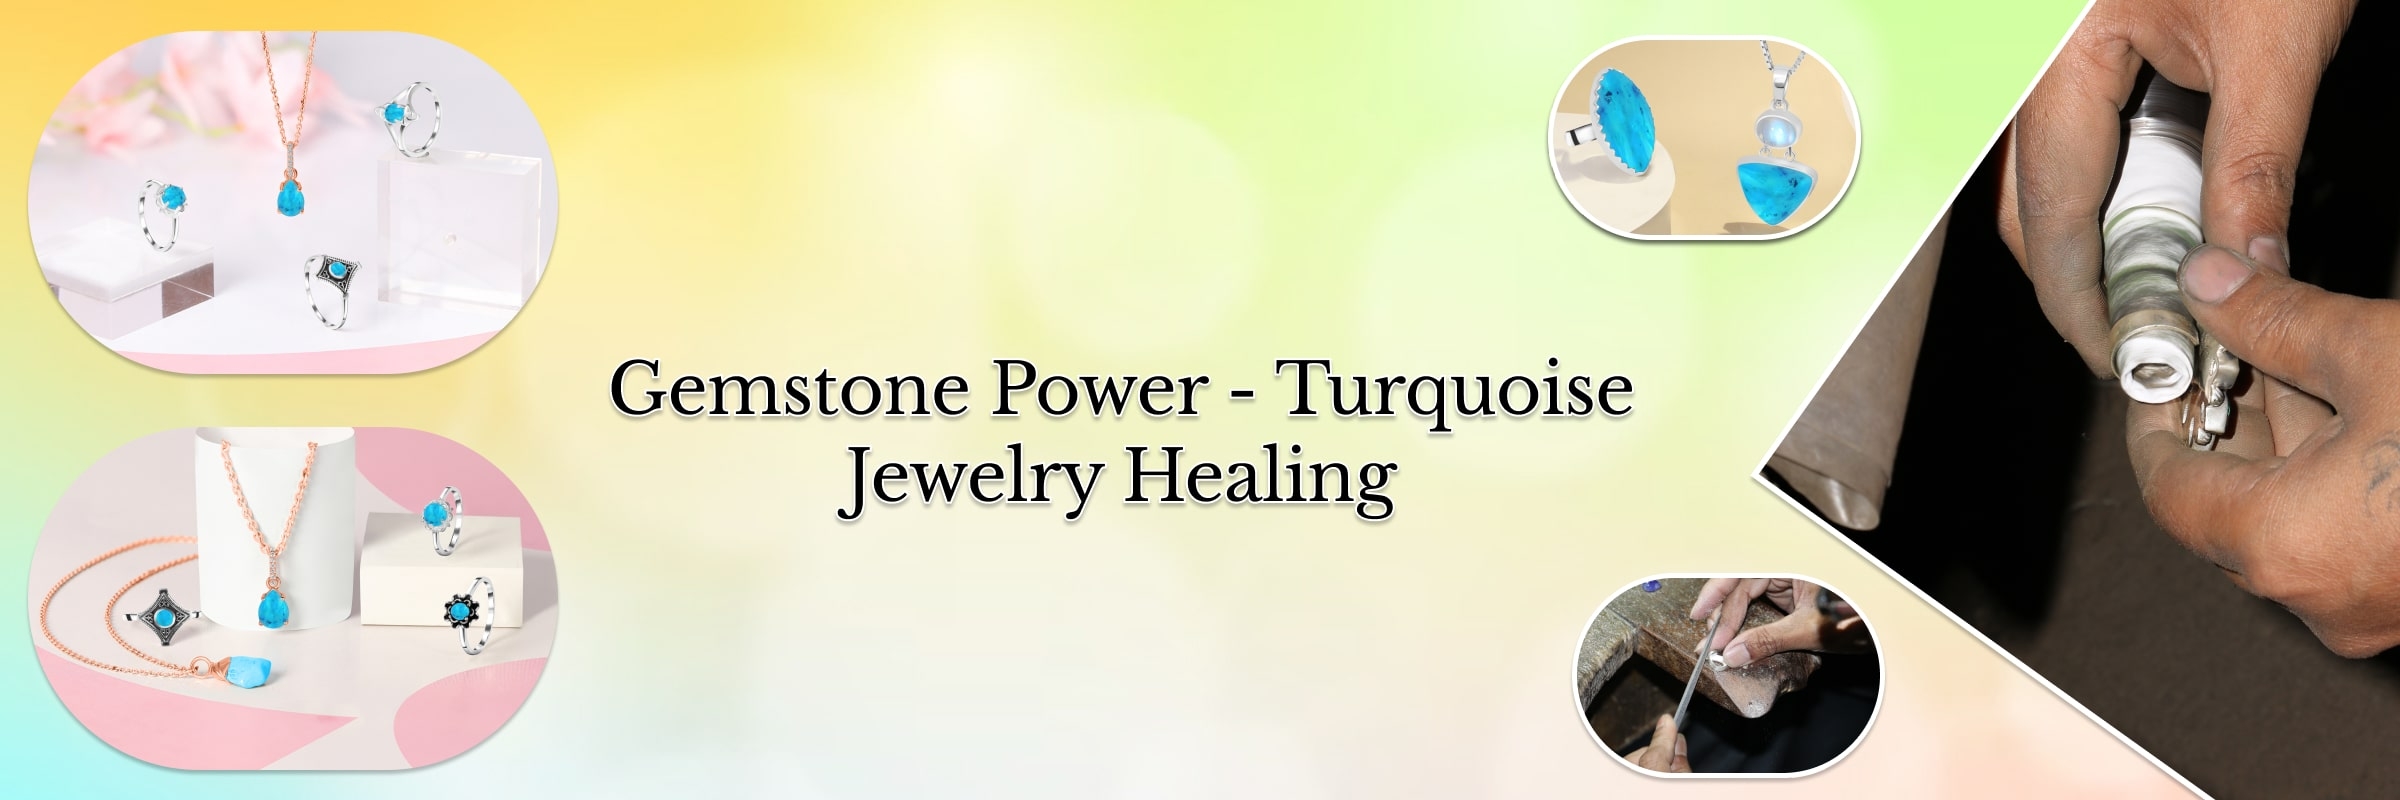 Healing Properties of Turquoise Jewelry